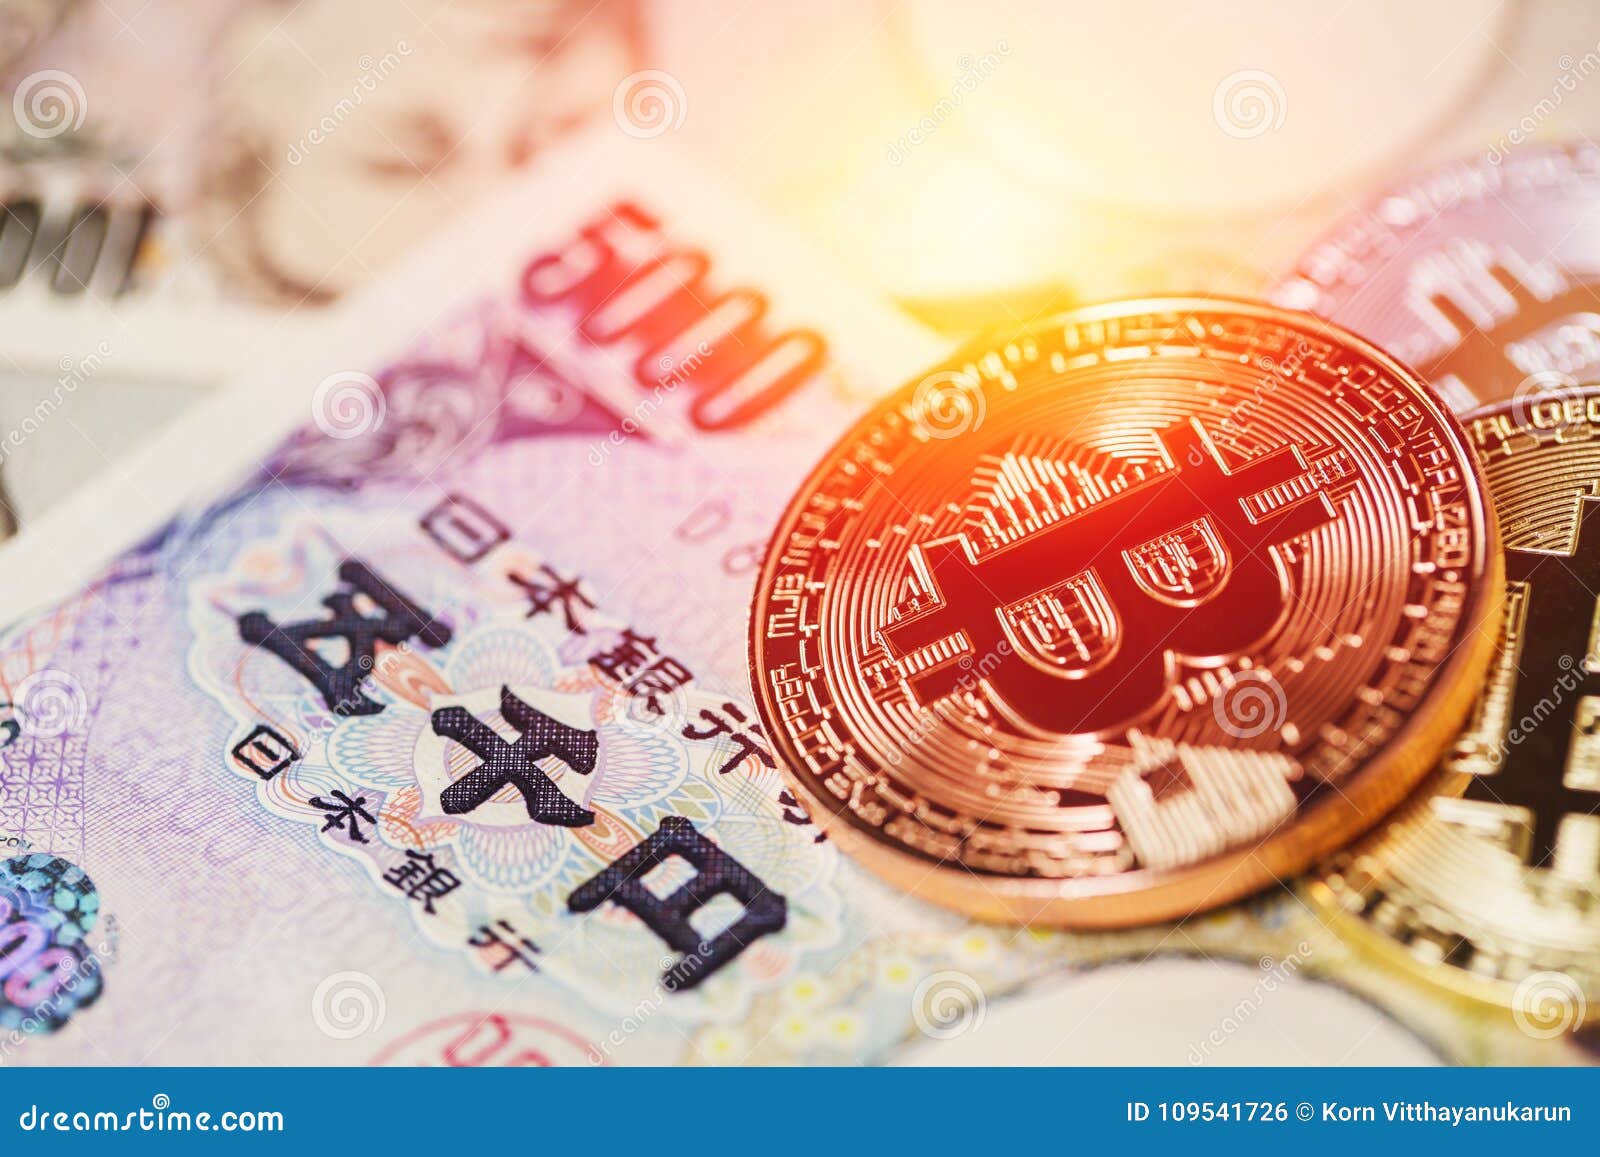 buy bitcoin with japanese yen